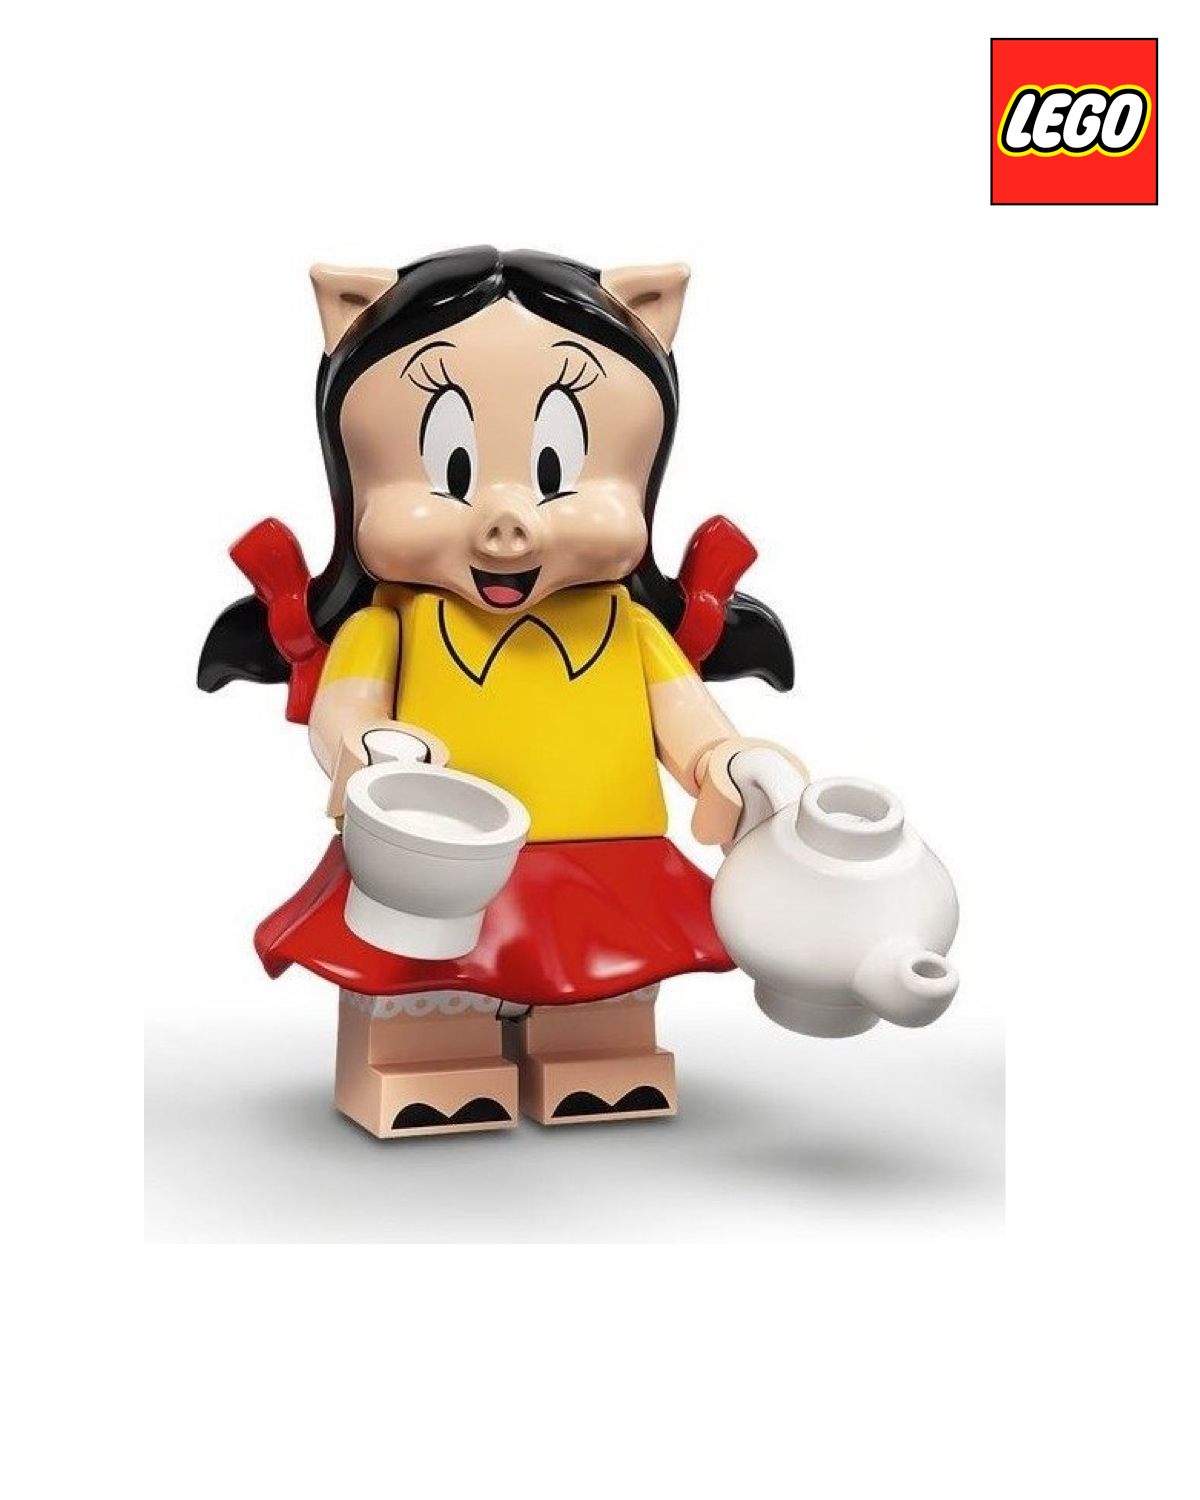 Petunia Pig - Looney Tunes | LEGO Minifigure | NEW CMF